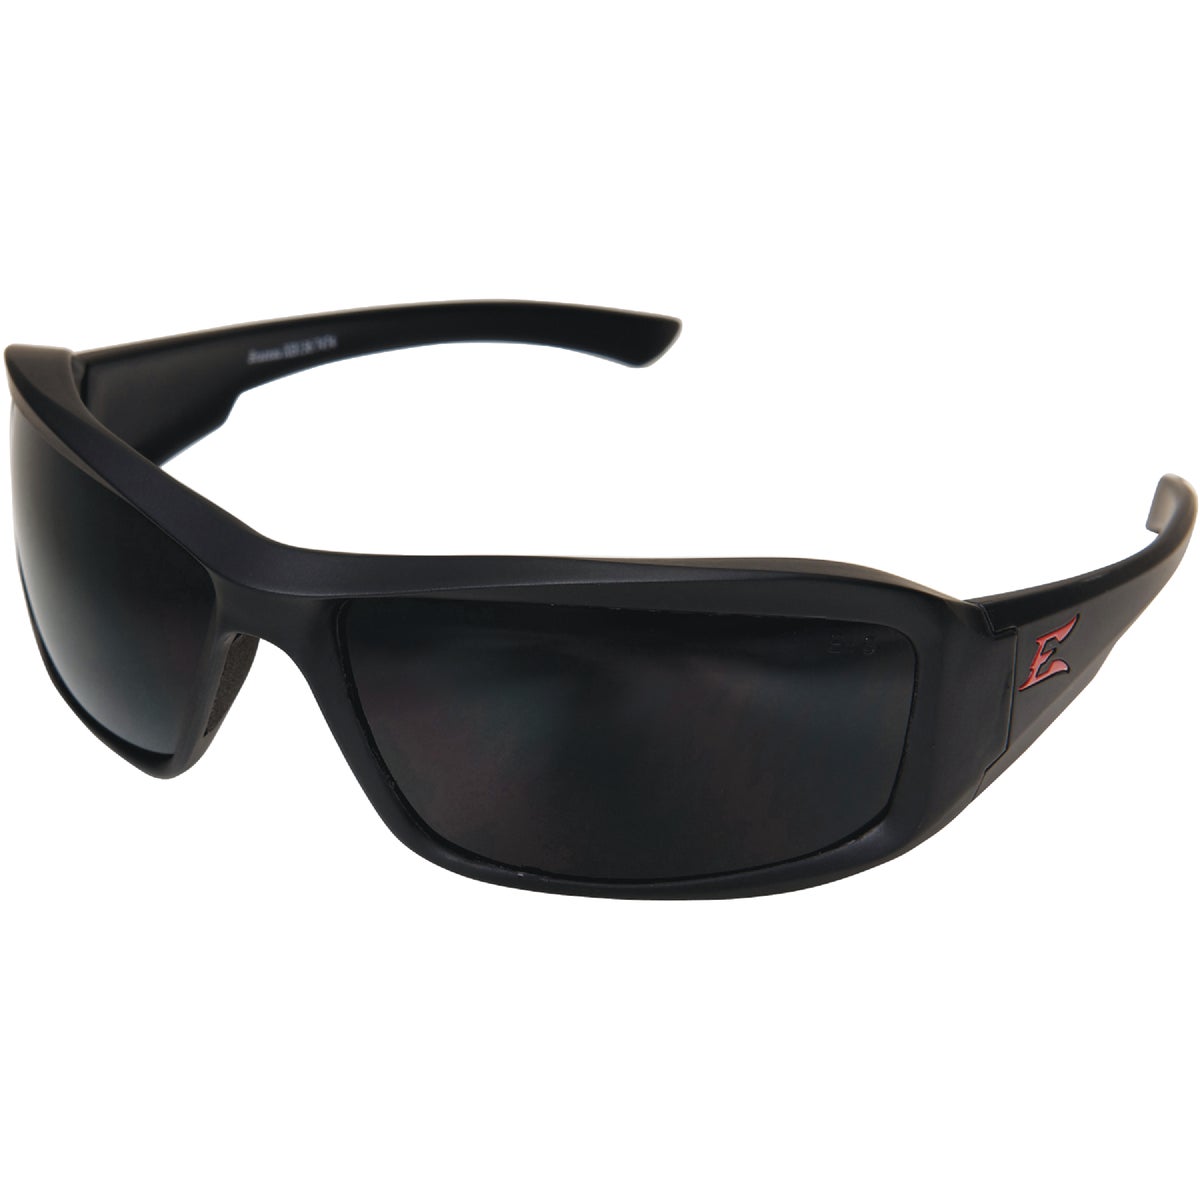 Edge Eyewear Brazeau Matte Black Frame Safety Glasses with Smoke Lenses